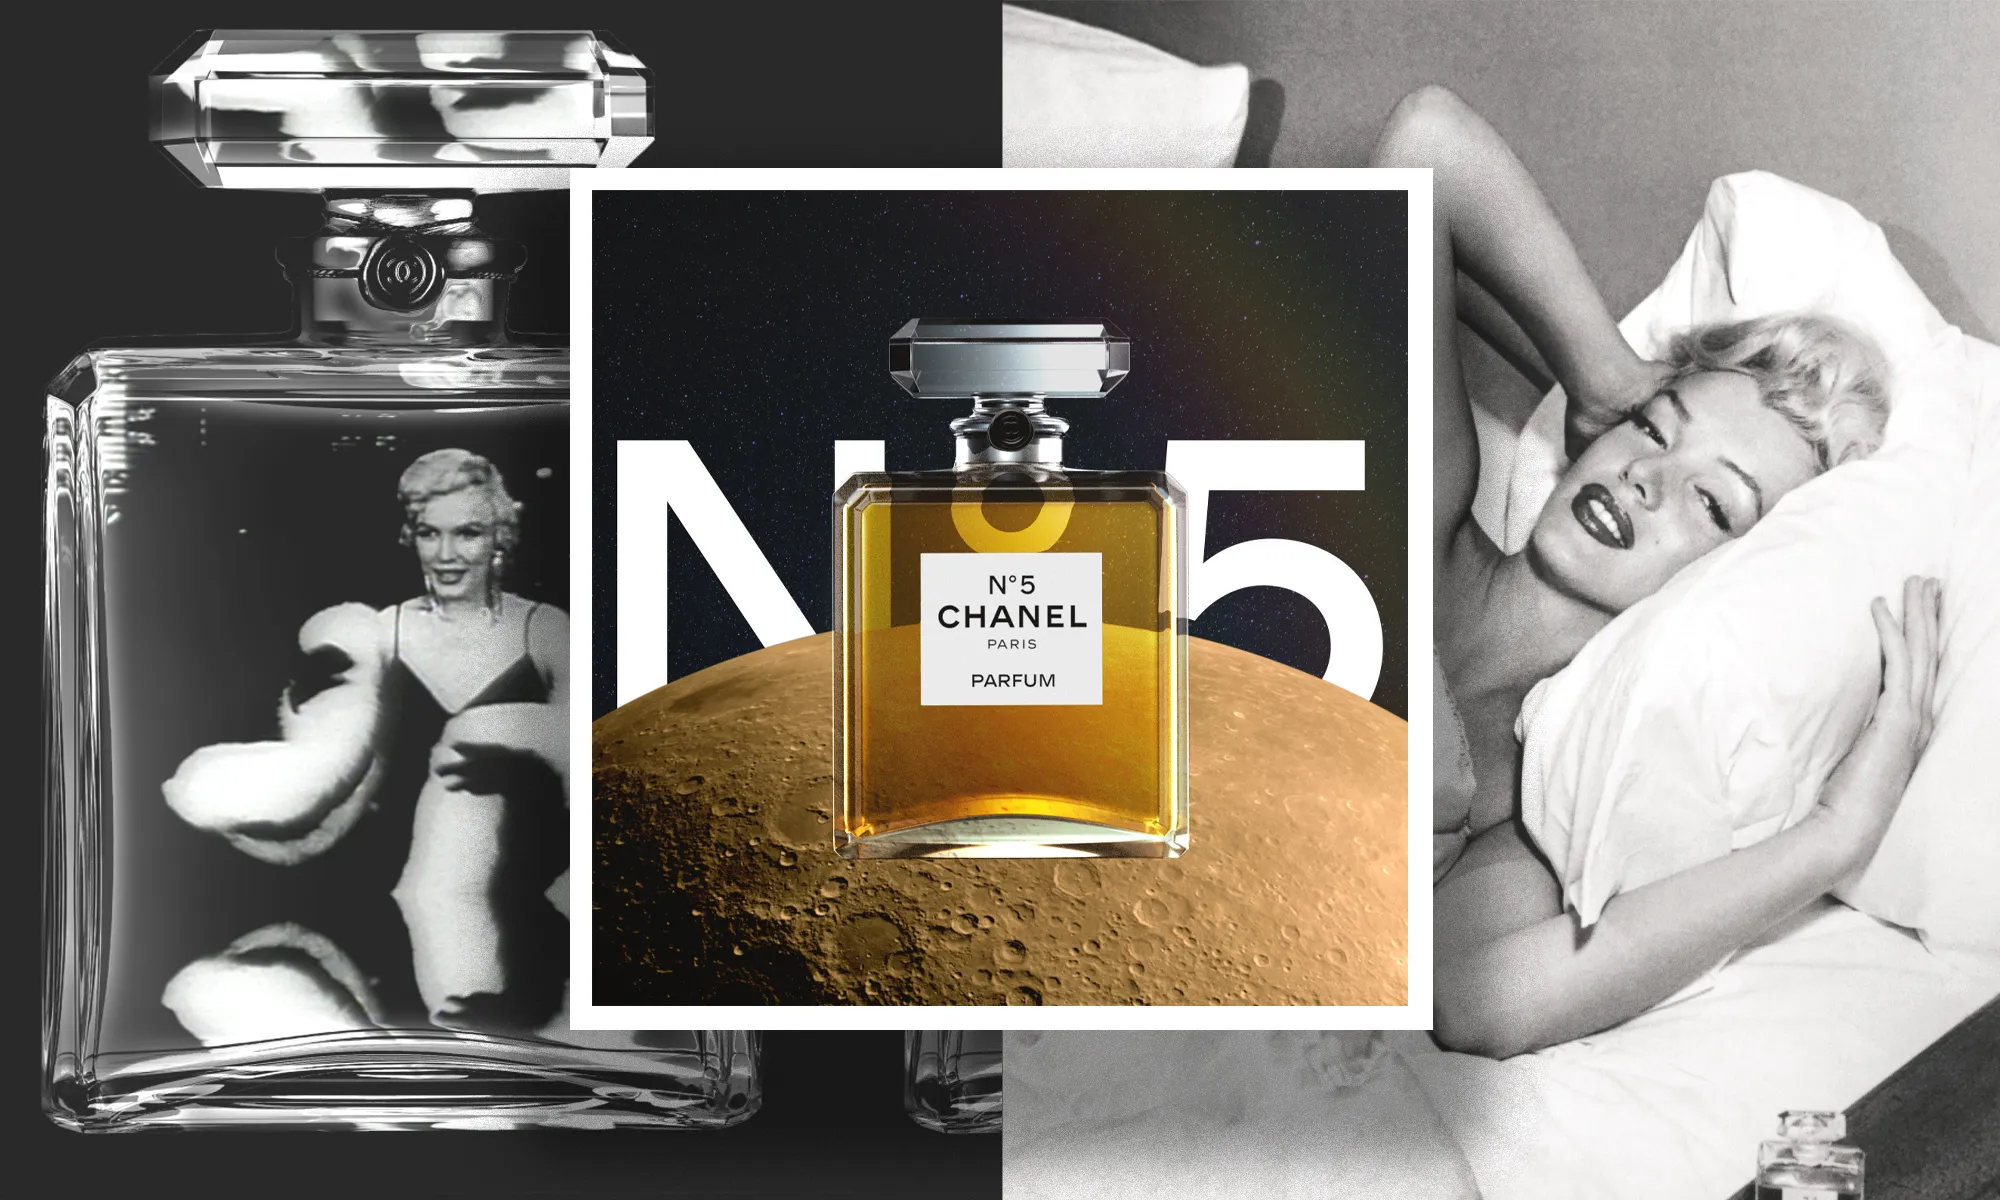 Just a few drops of Chanel N°5